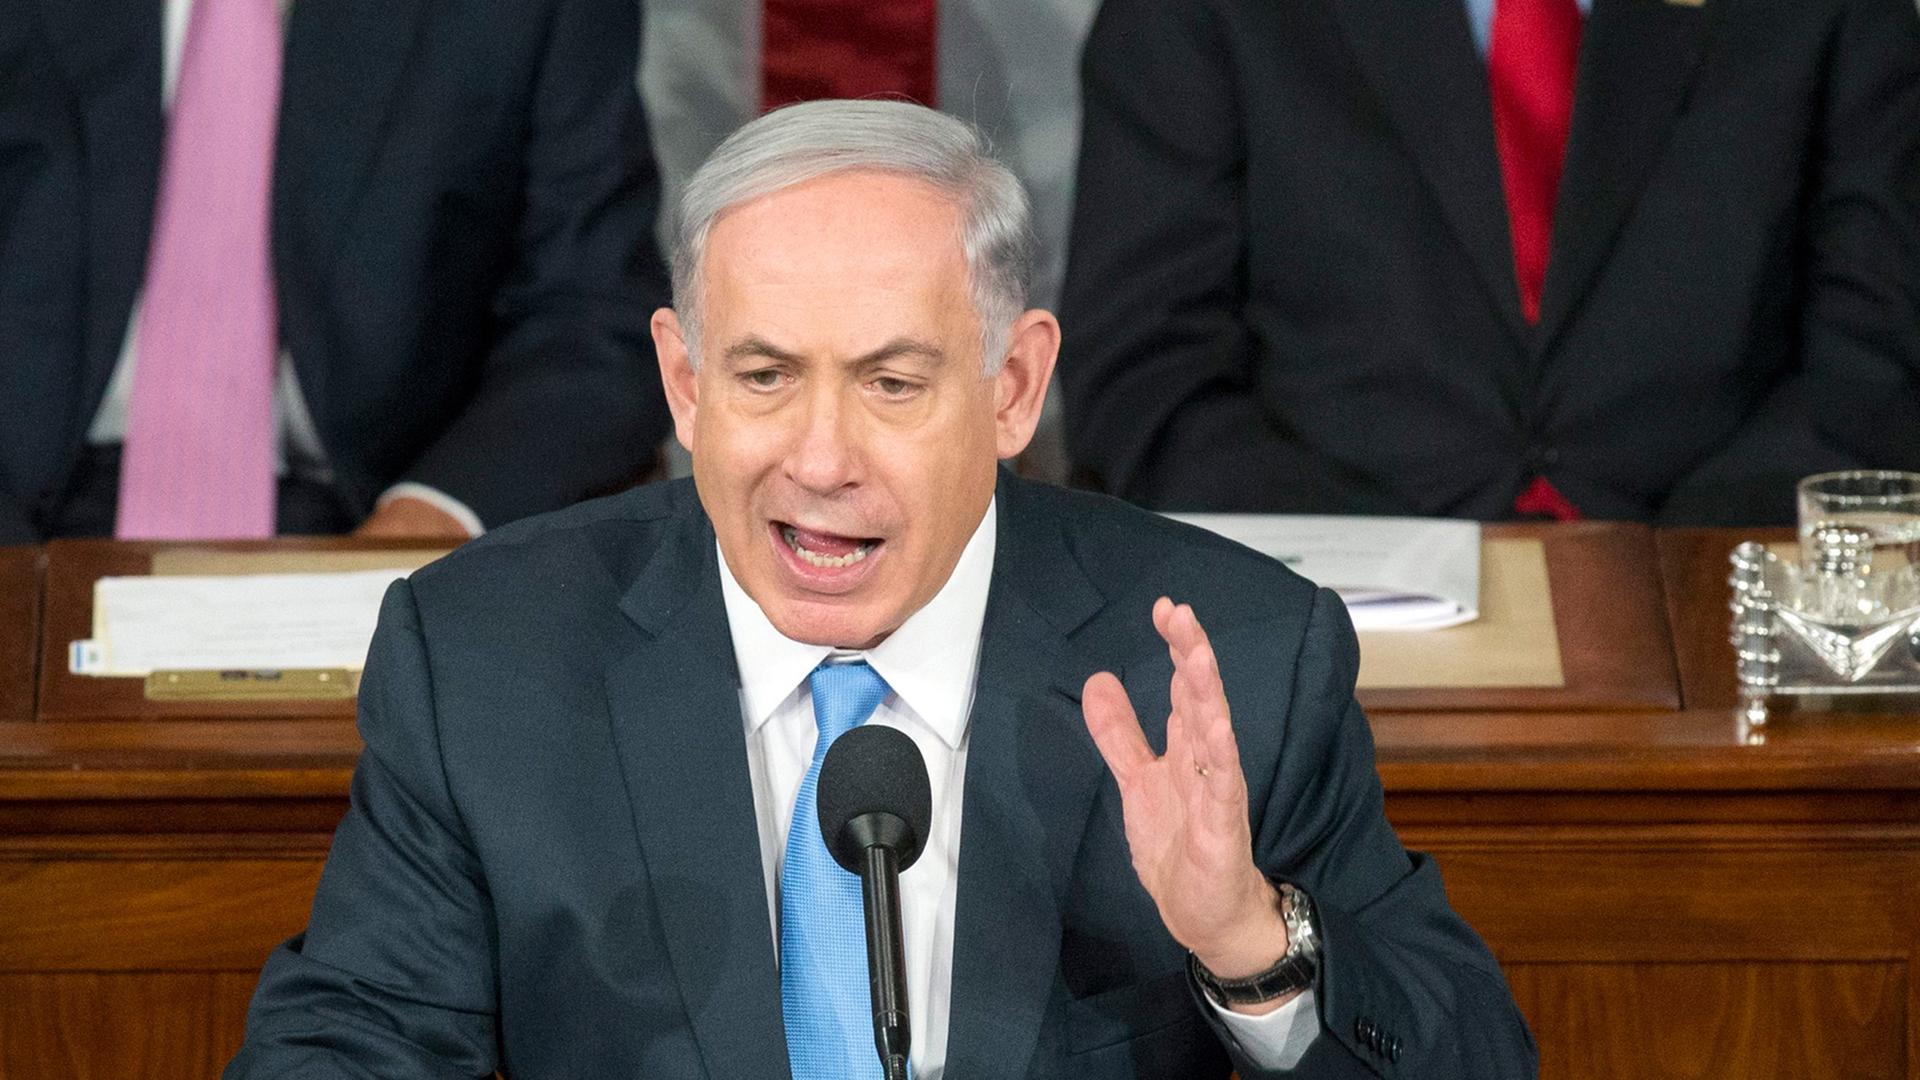 Benjamin Netanjahu am Rednerpult des US-Repräsentantenhauses.